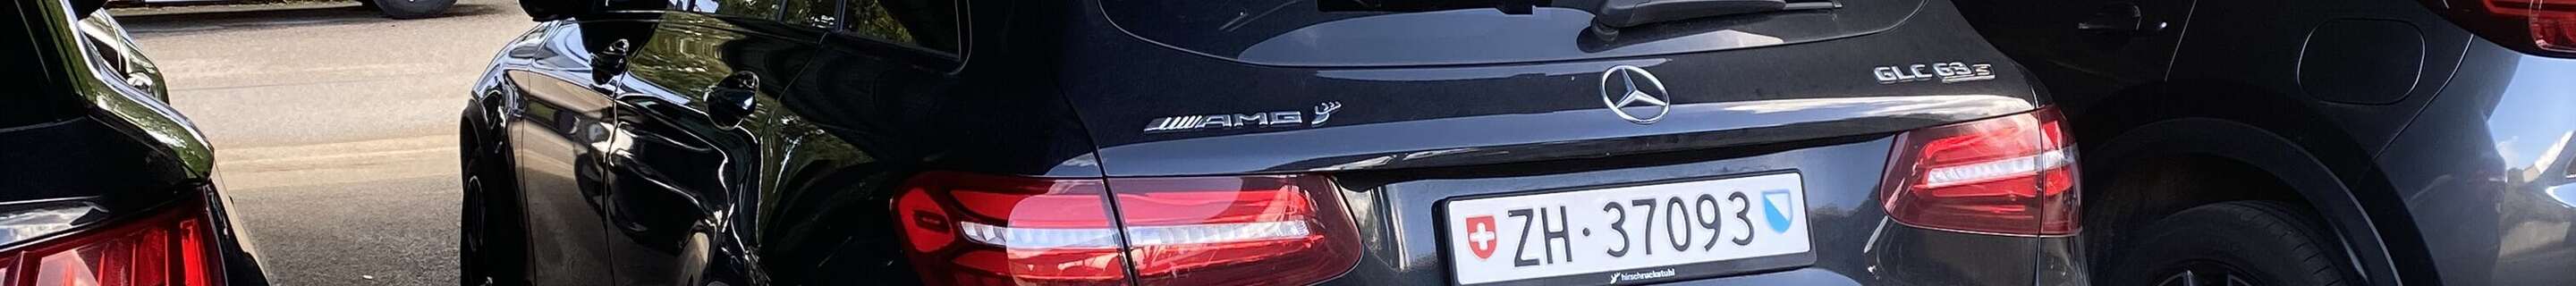 Mercedes-AMG GLC 63 S X253 2018